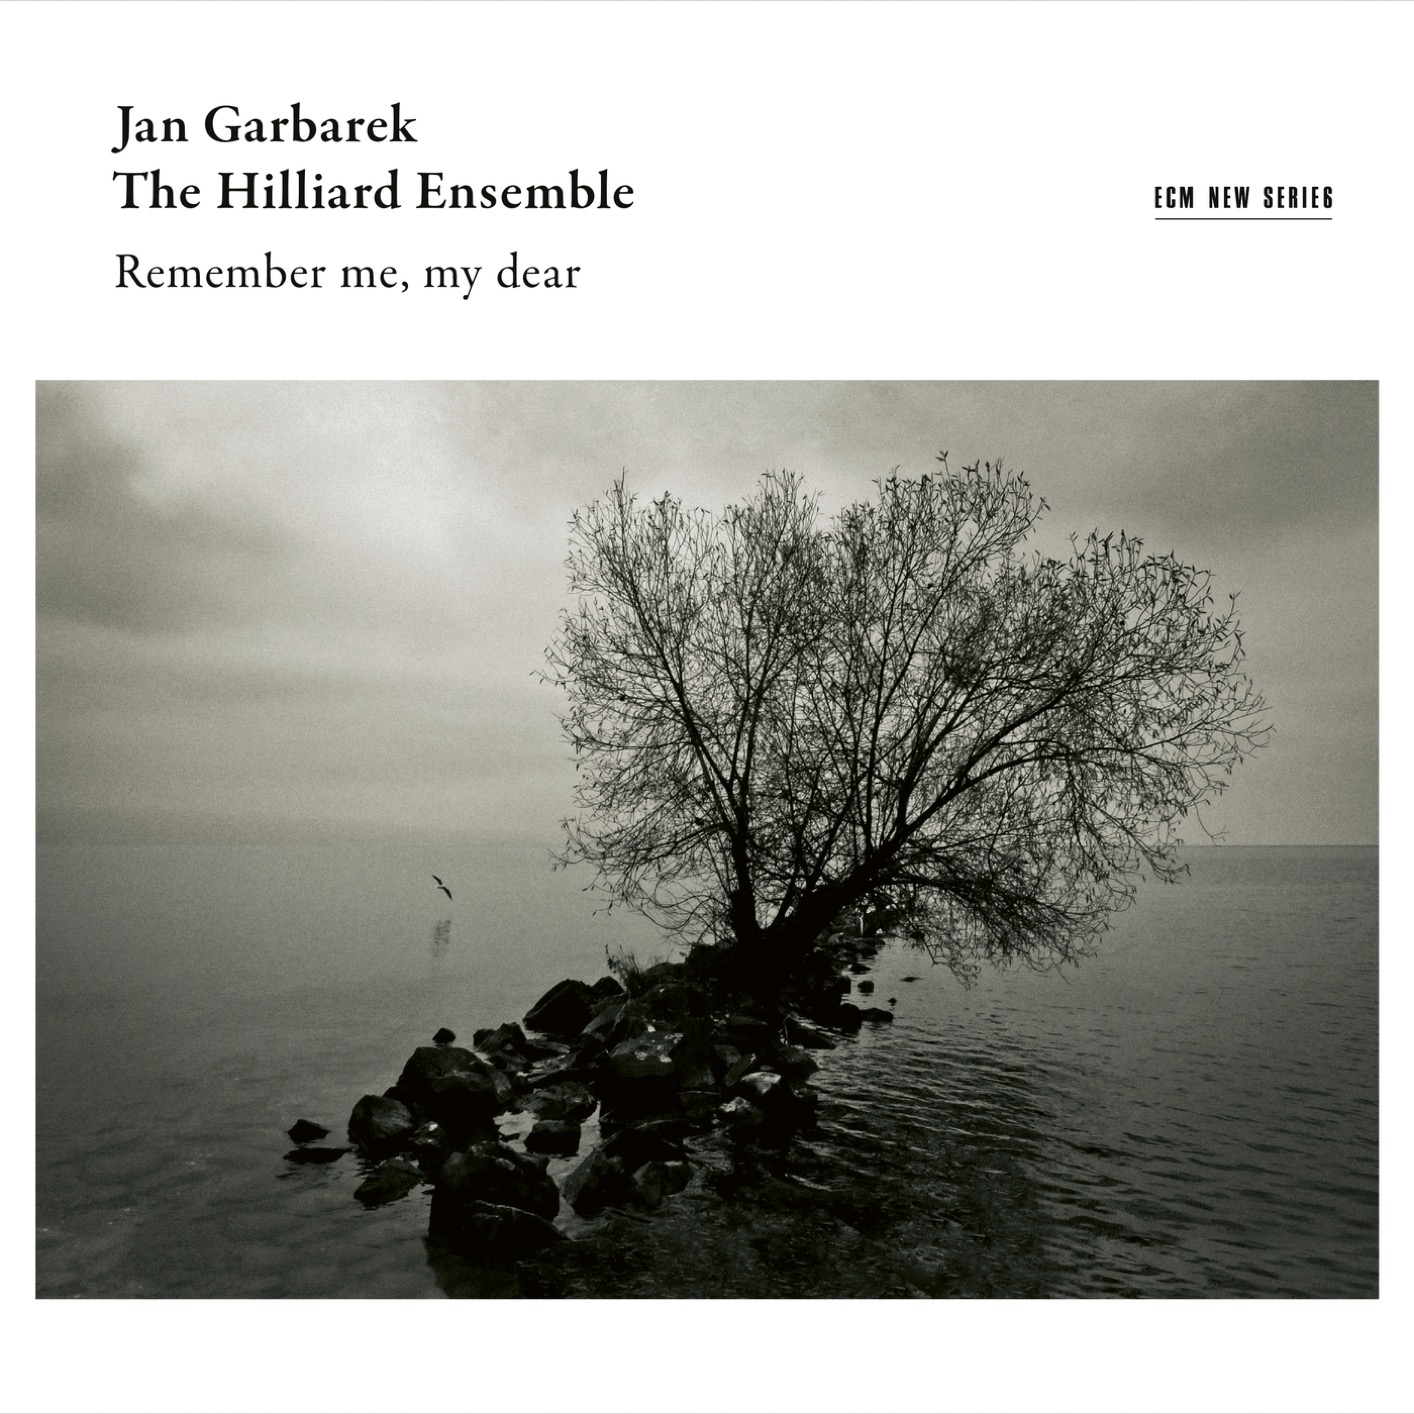 Jan Garbarek & The Hilliard Ensemble - Remember Me, My Dear (Live in Bellinzona - 2014) (2019) [FLAC 24bit/48kHz]